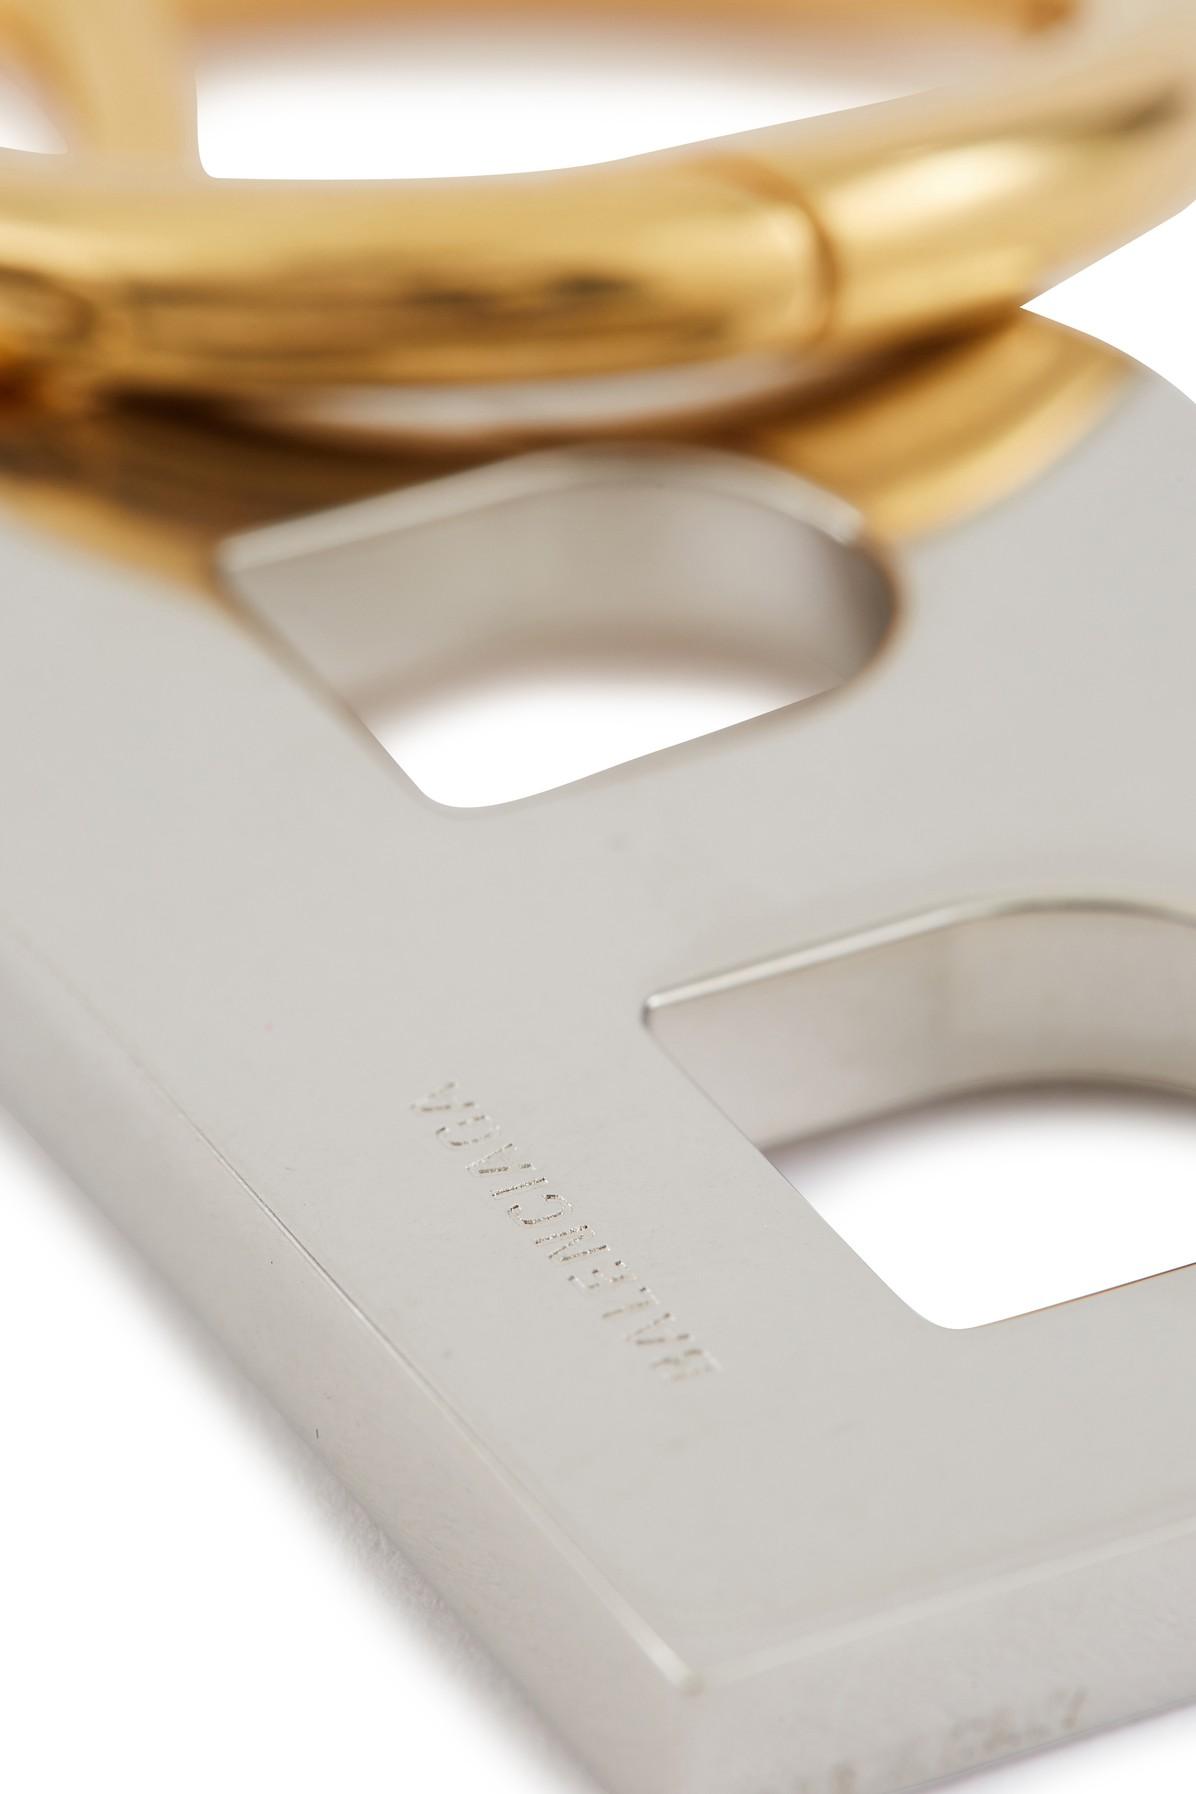 Balenciaga B Chain Key Ring in Silver - Gold (Metallic) - Lyst